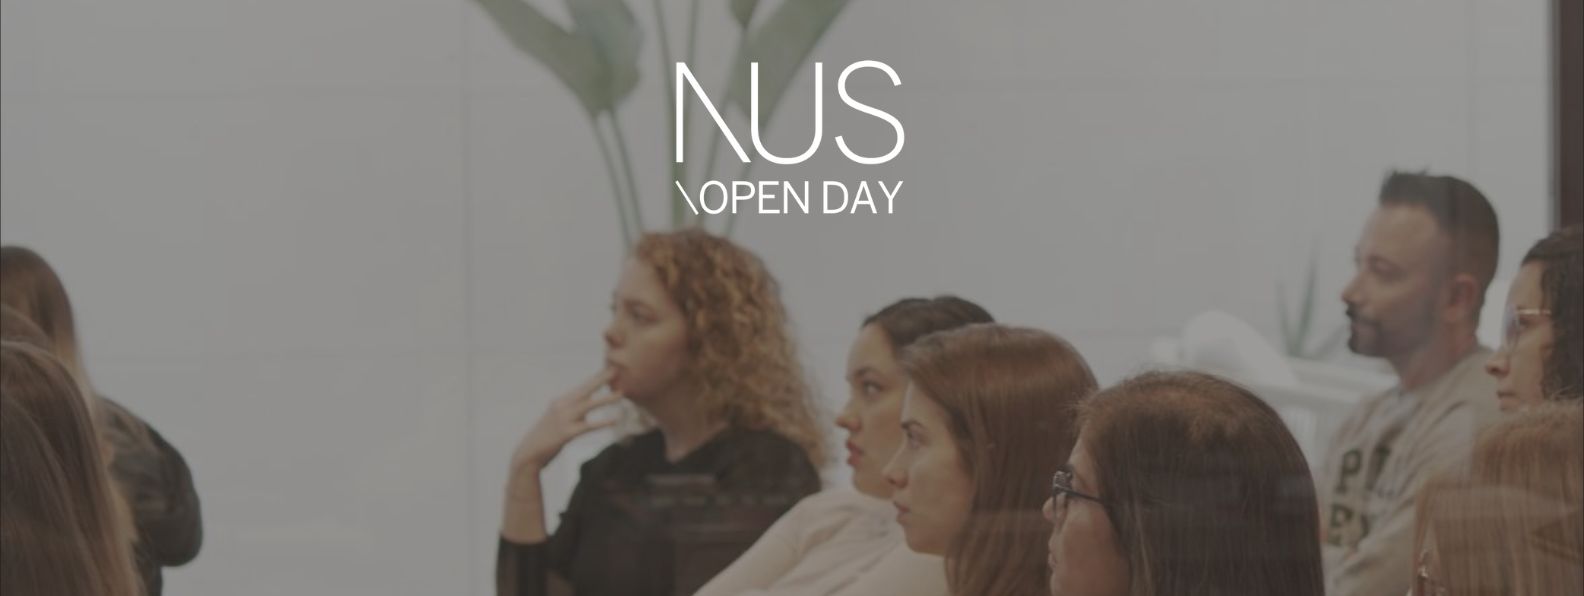 nus-open-day-banner-home